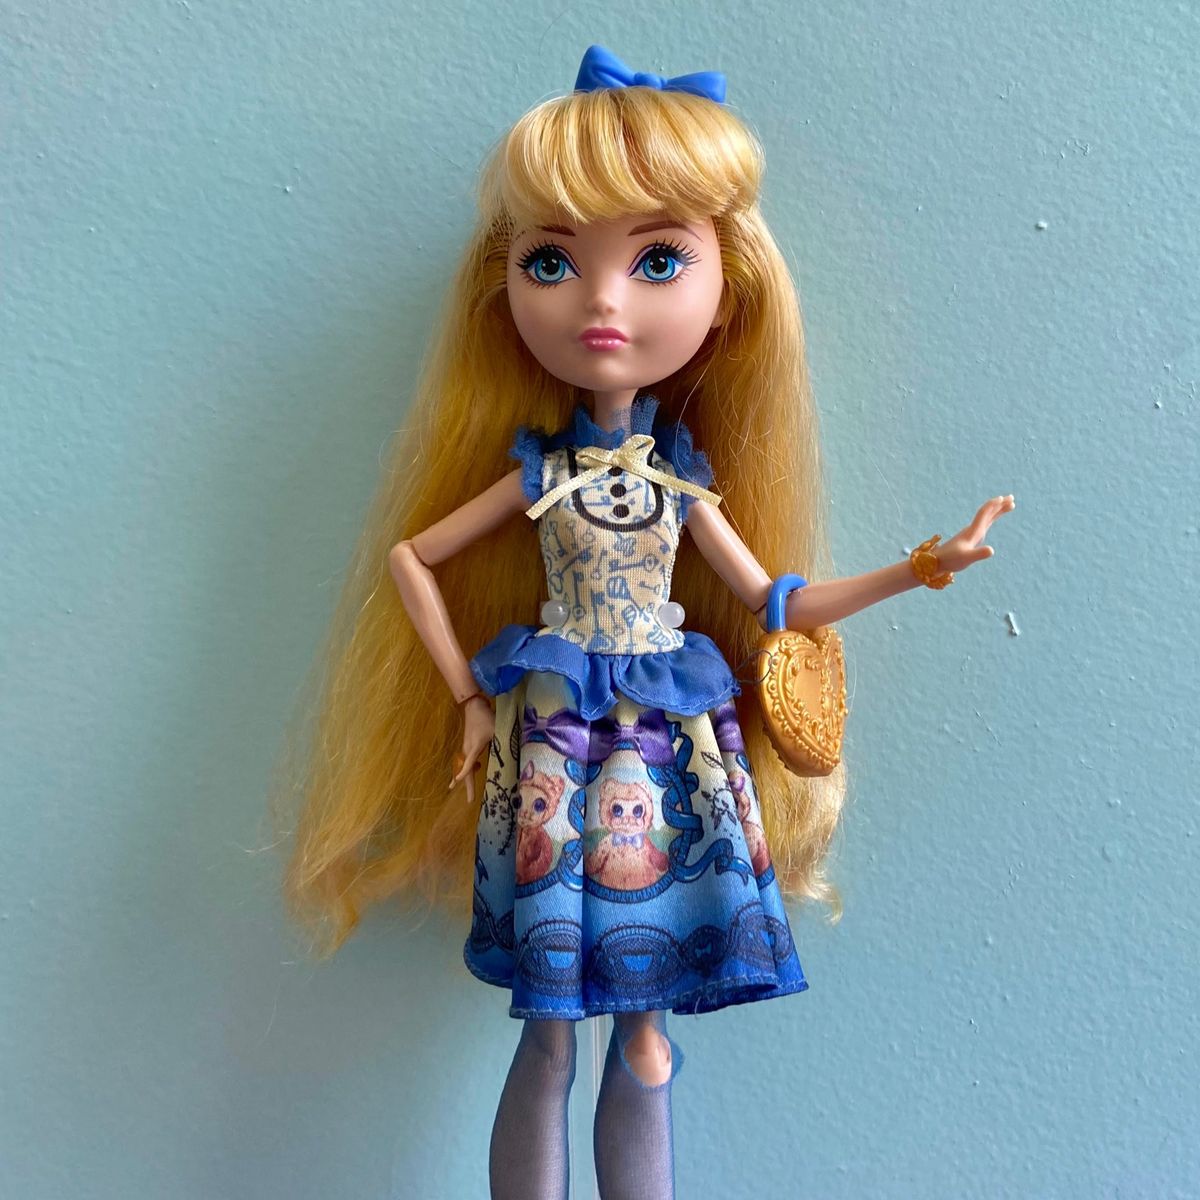 Boneca Ever After High Blondie Lockes Ano 2014 - Mattel no Shoptime